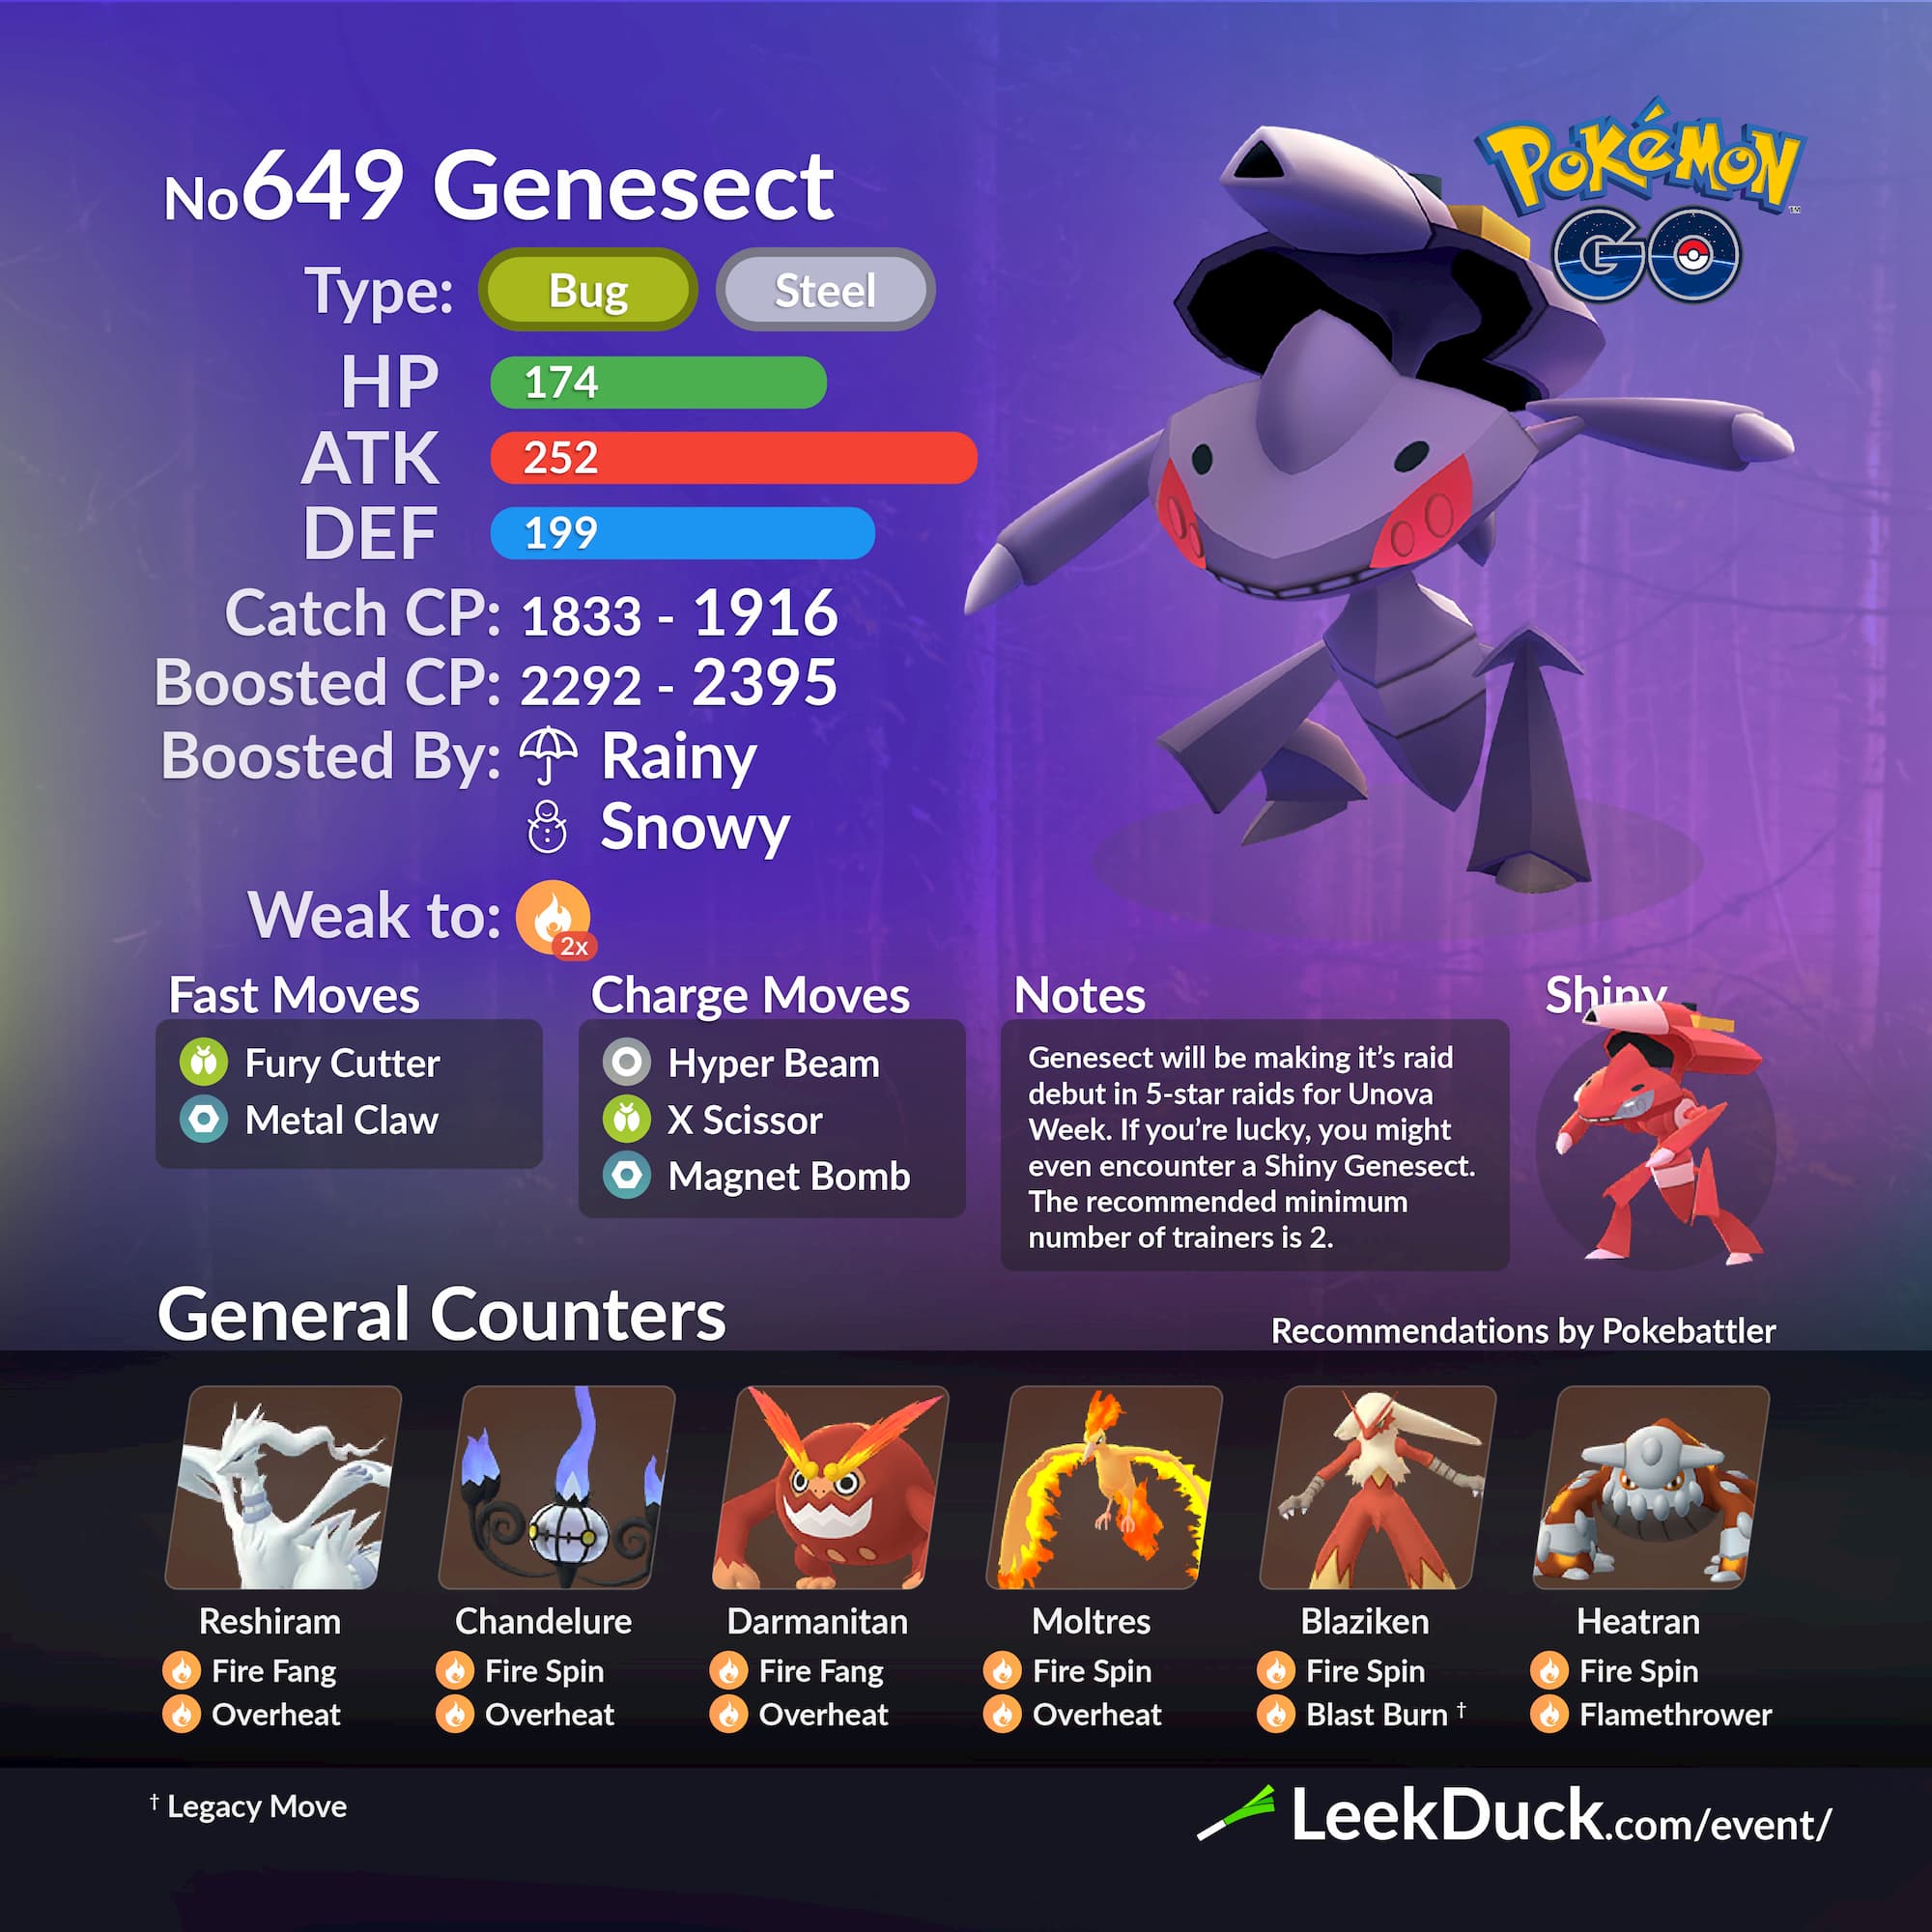 Pokémon Go' Unova Week Raids: Shiny Genesect Counters & Every New Boss